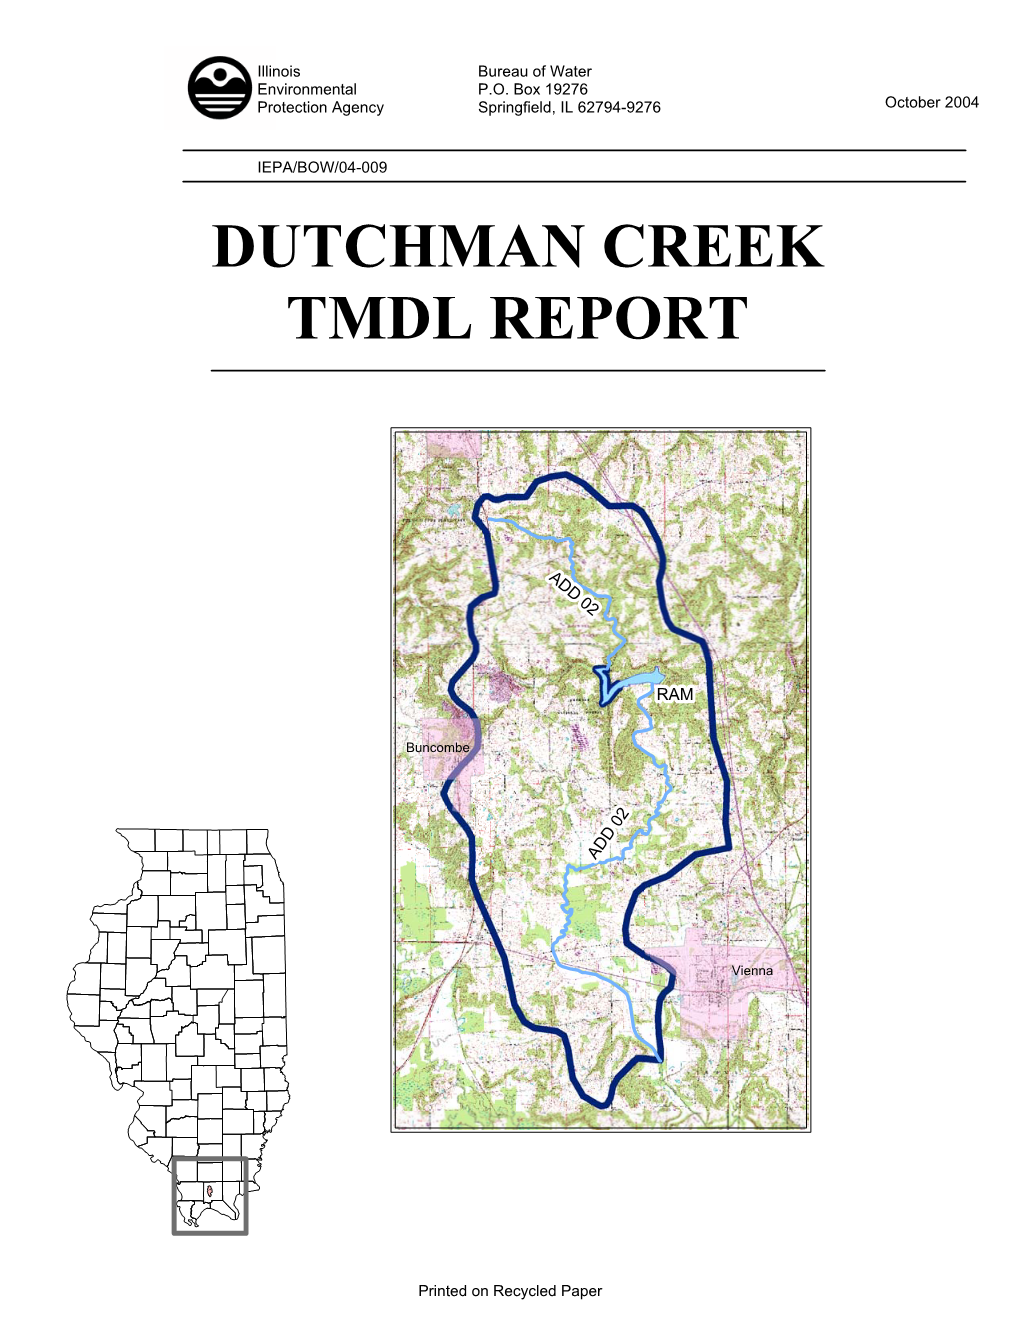 Dutchman Creek Tmdl Report